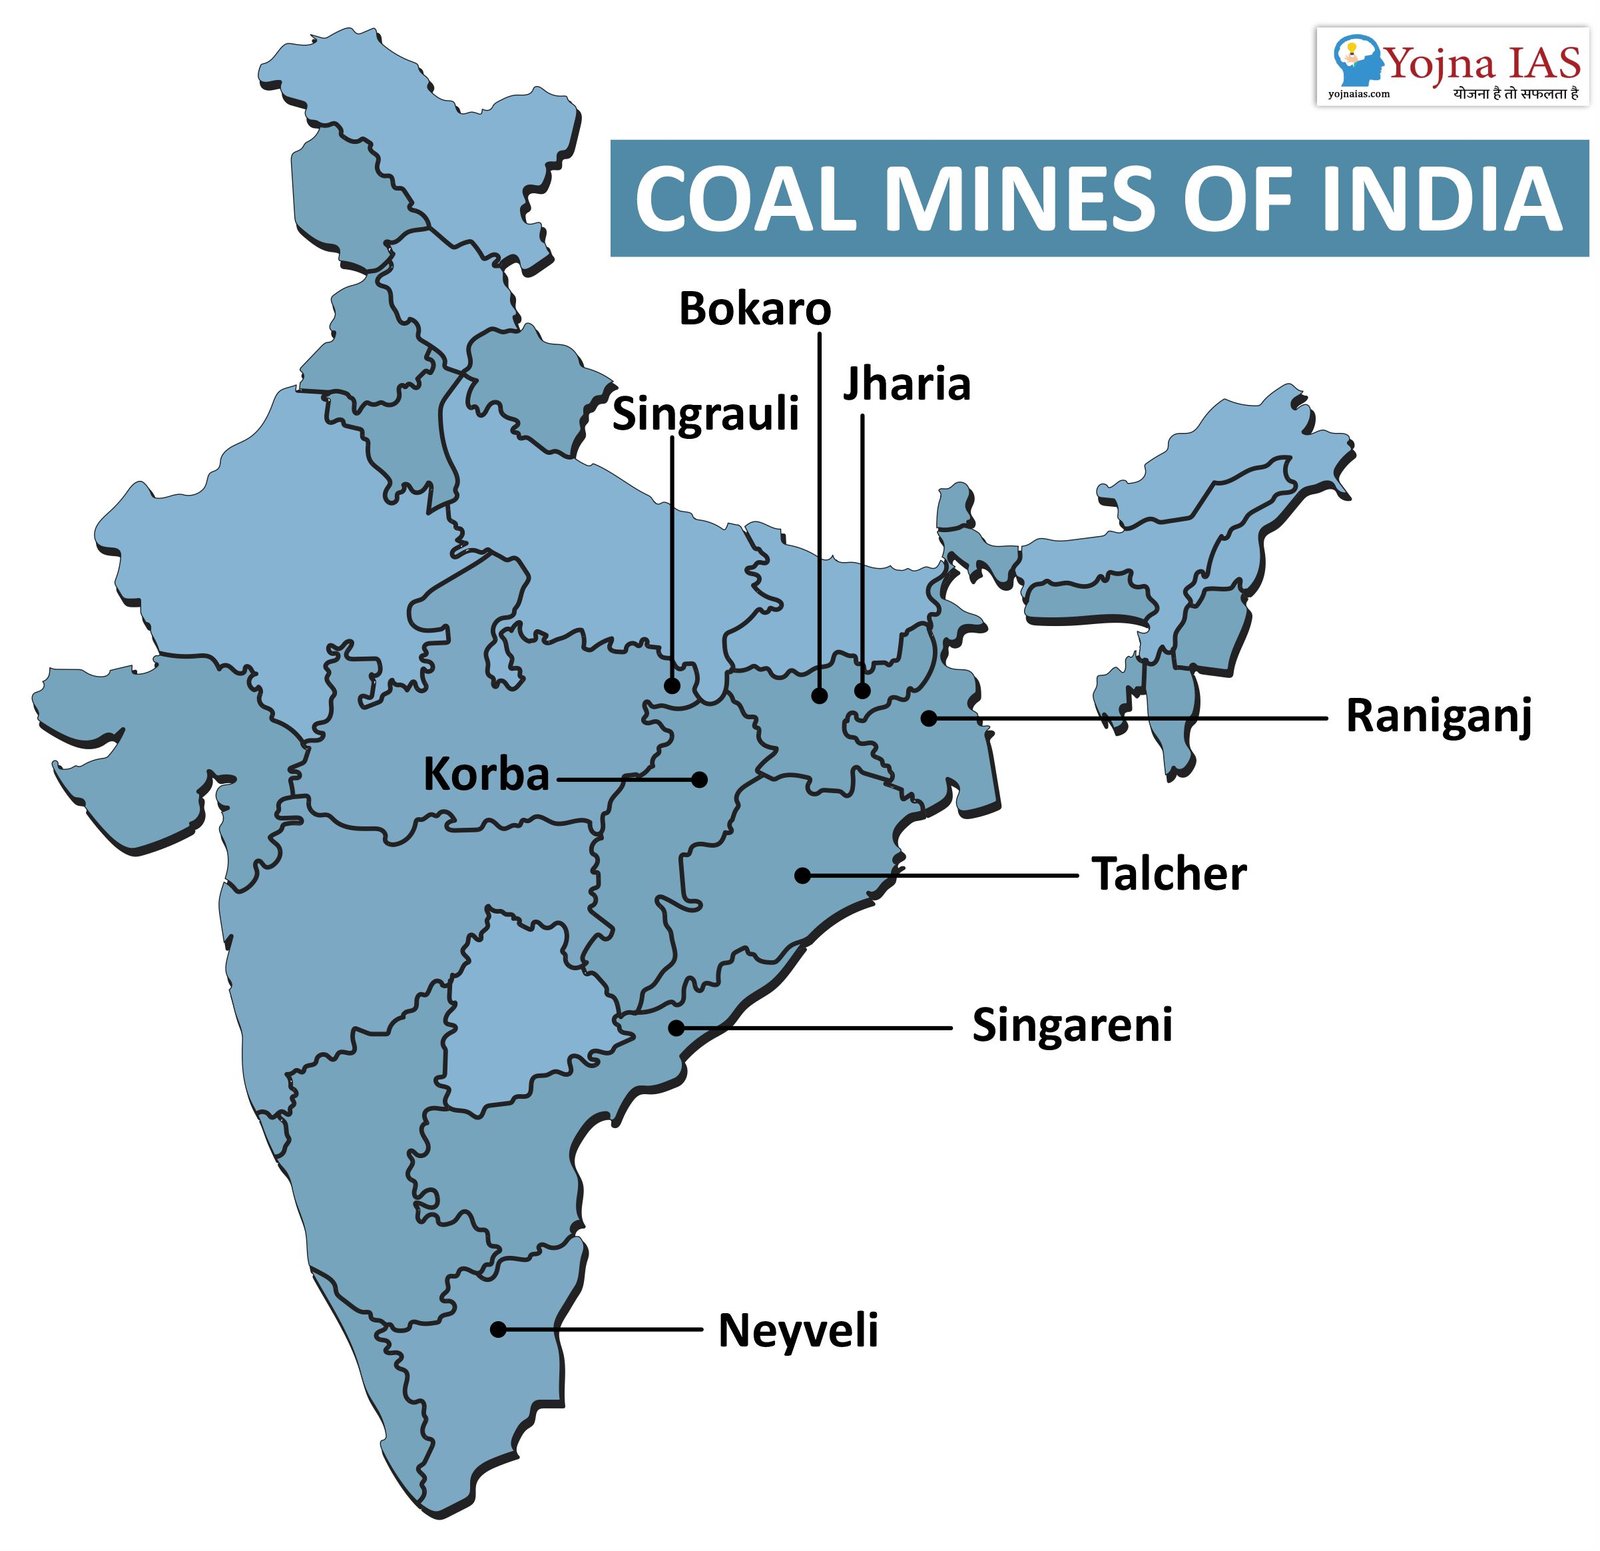 COAL MINES OF INDIA